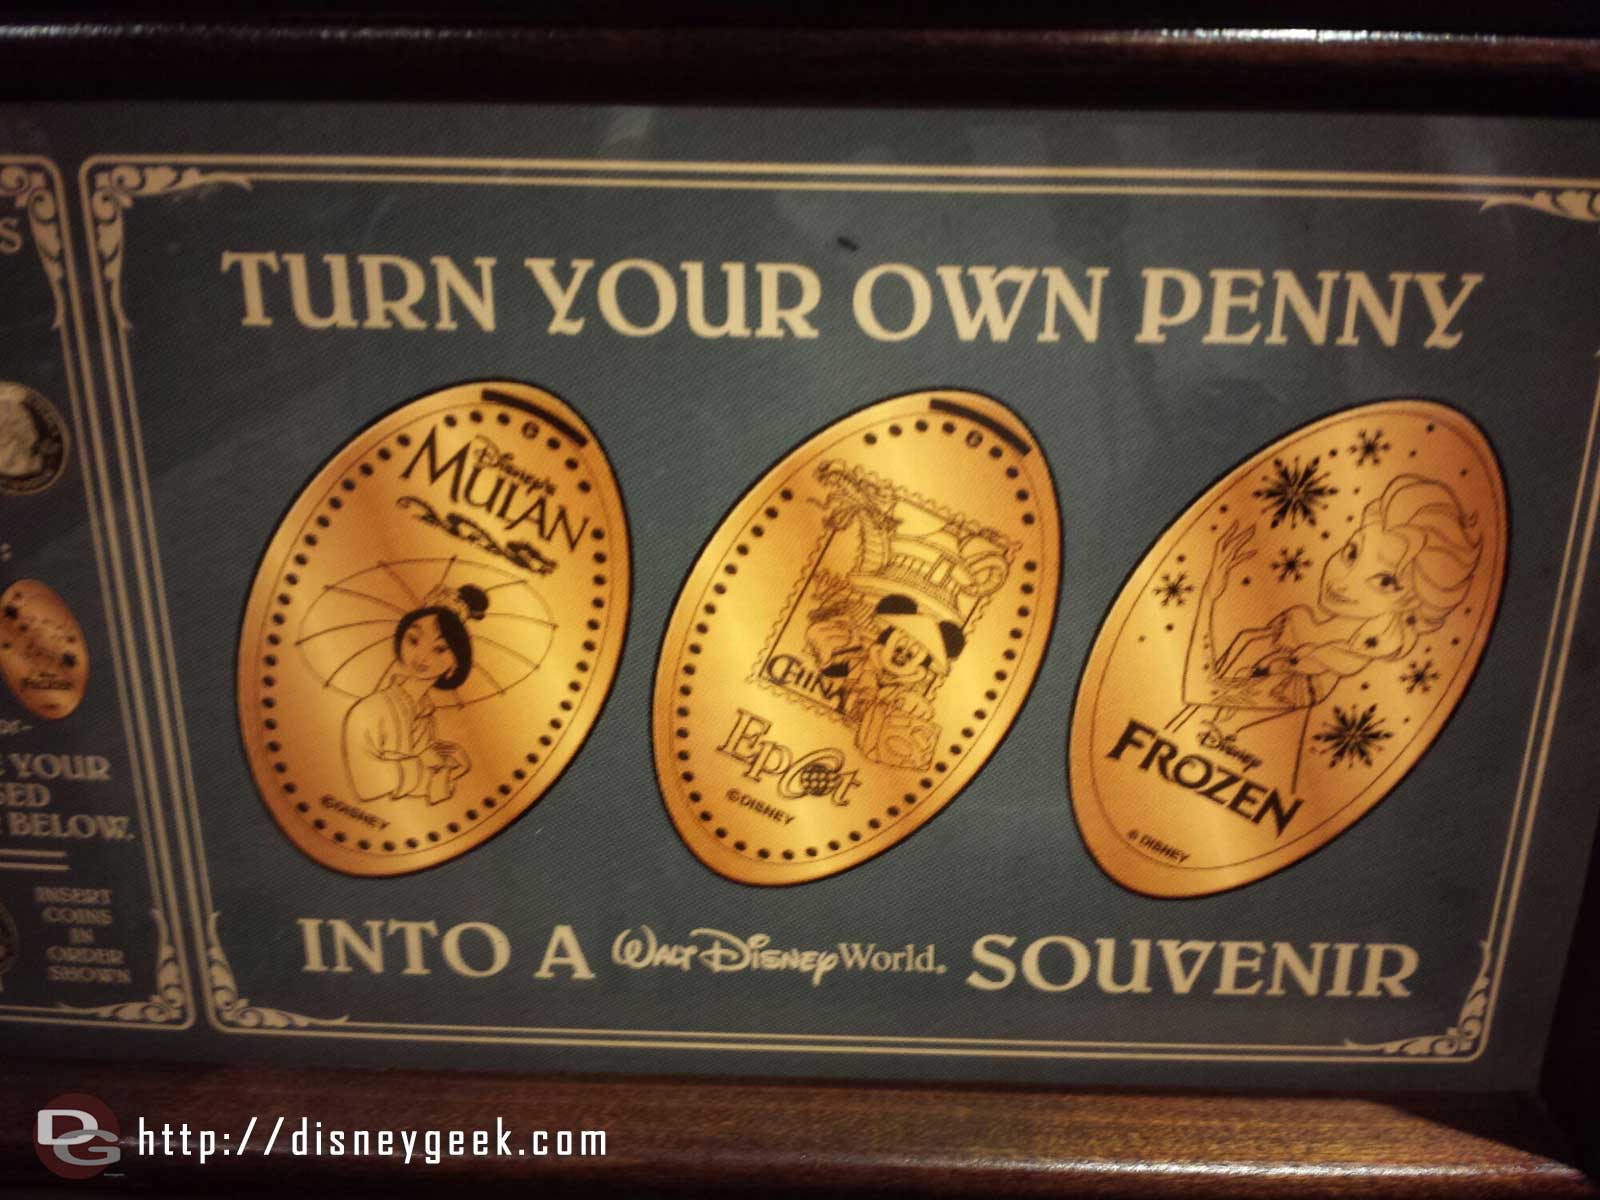 The pressed pennies at the International Gateway - Elsa, Mulan, and China